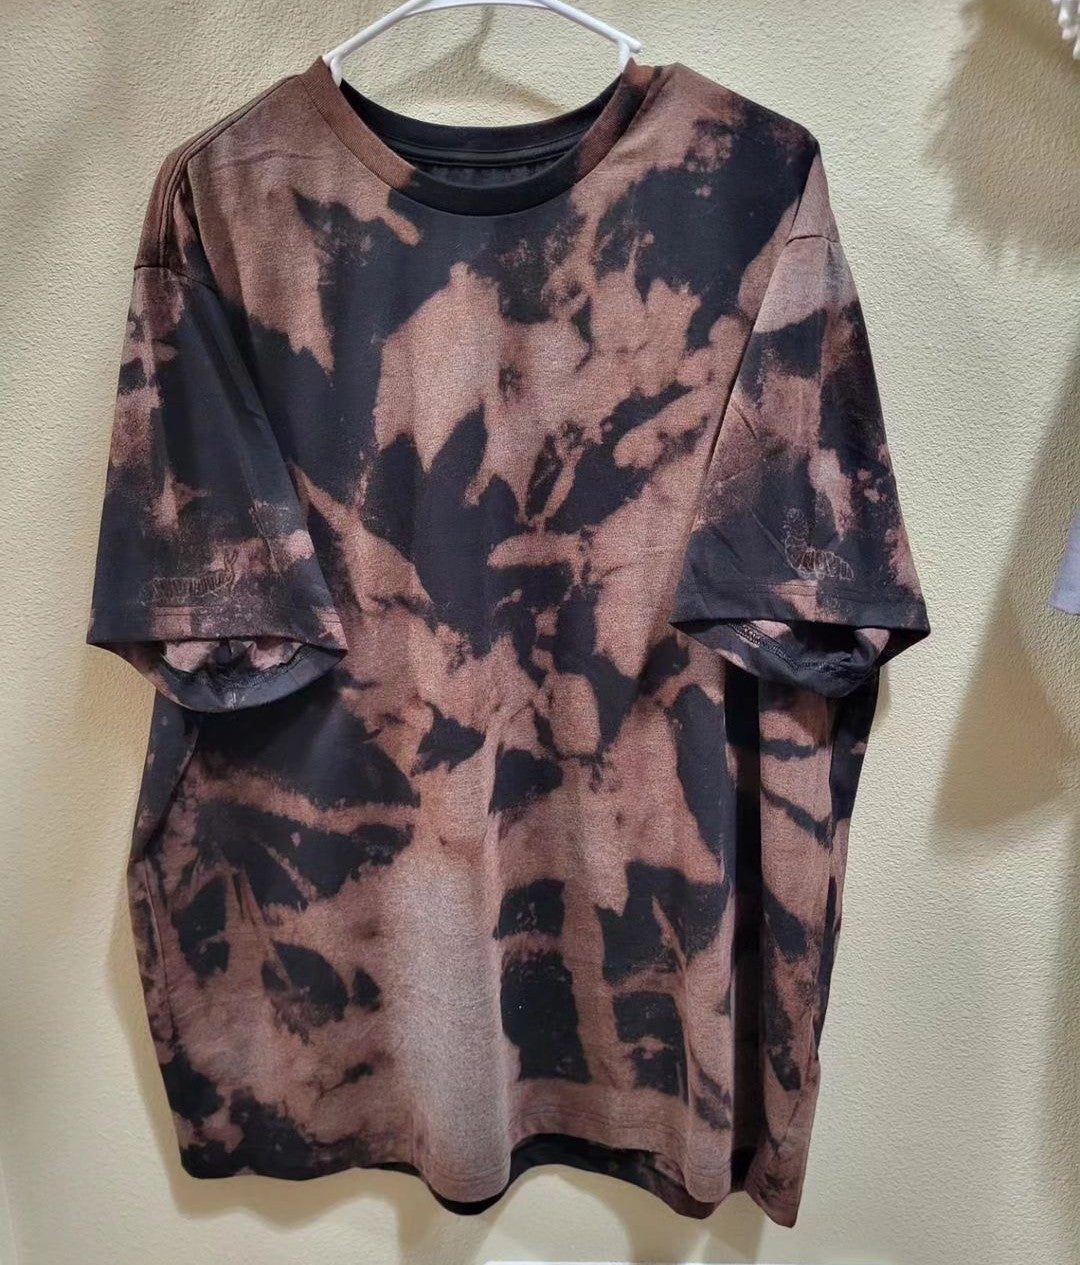 Tye-dye moth shirt